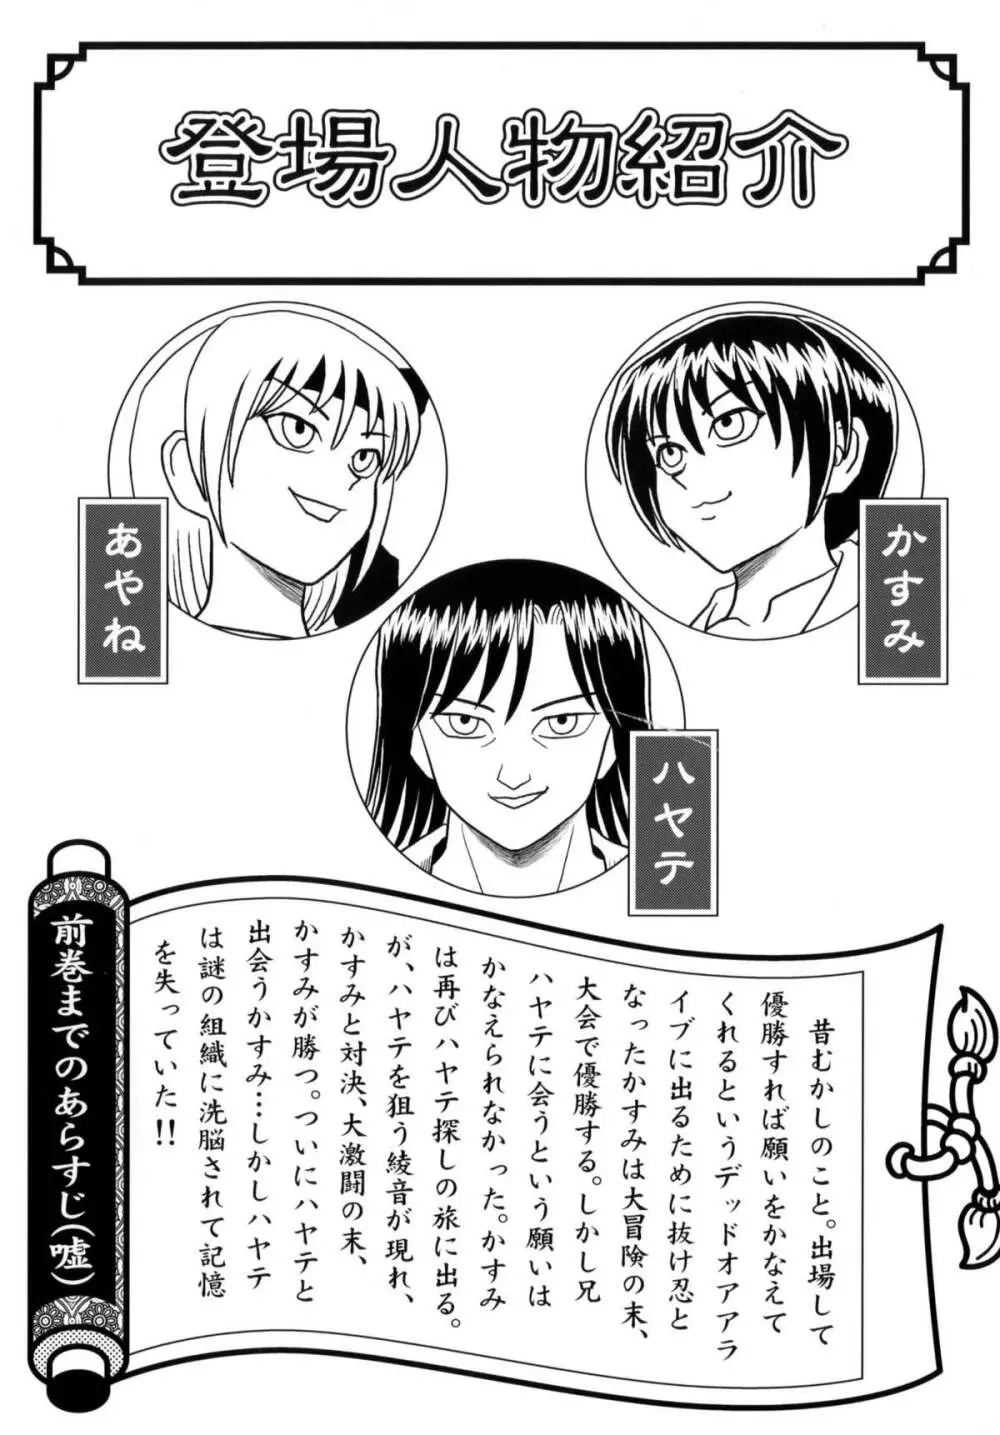 KASUMI OR AYANE - page2